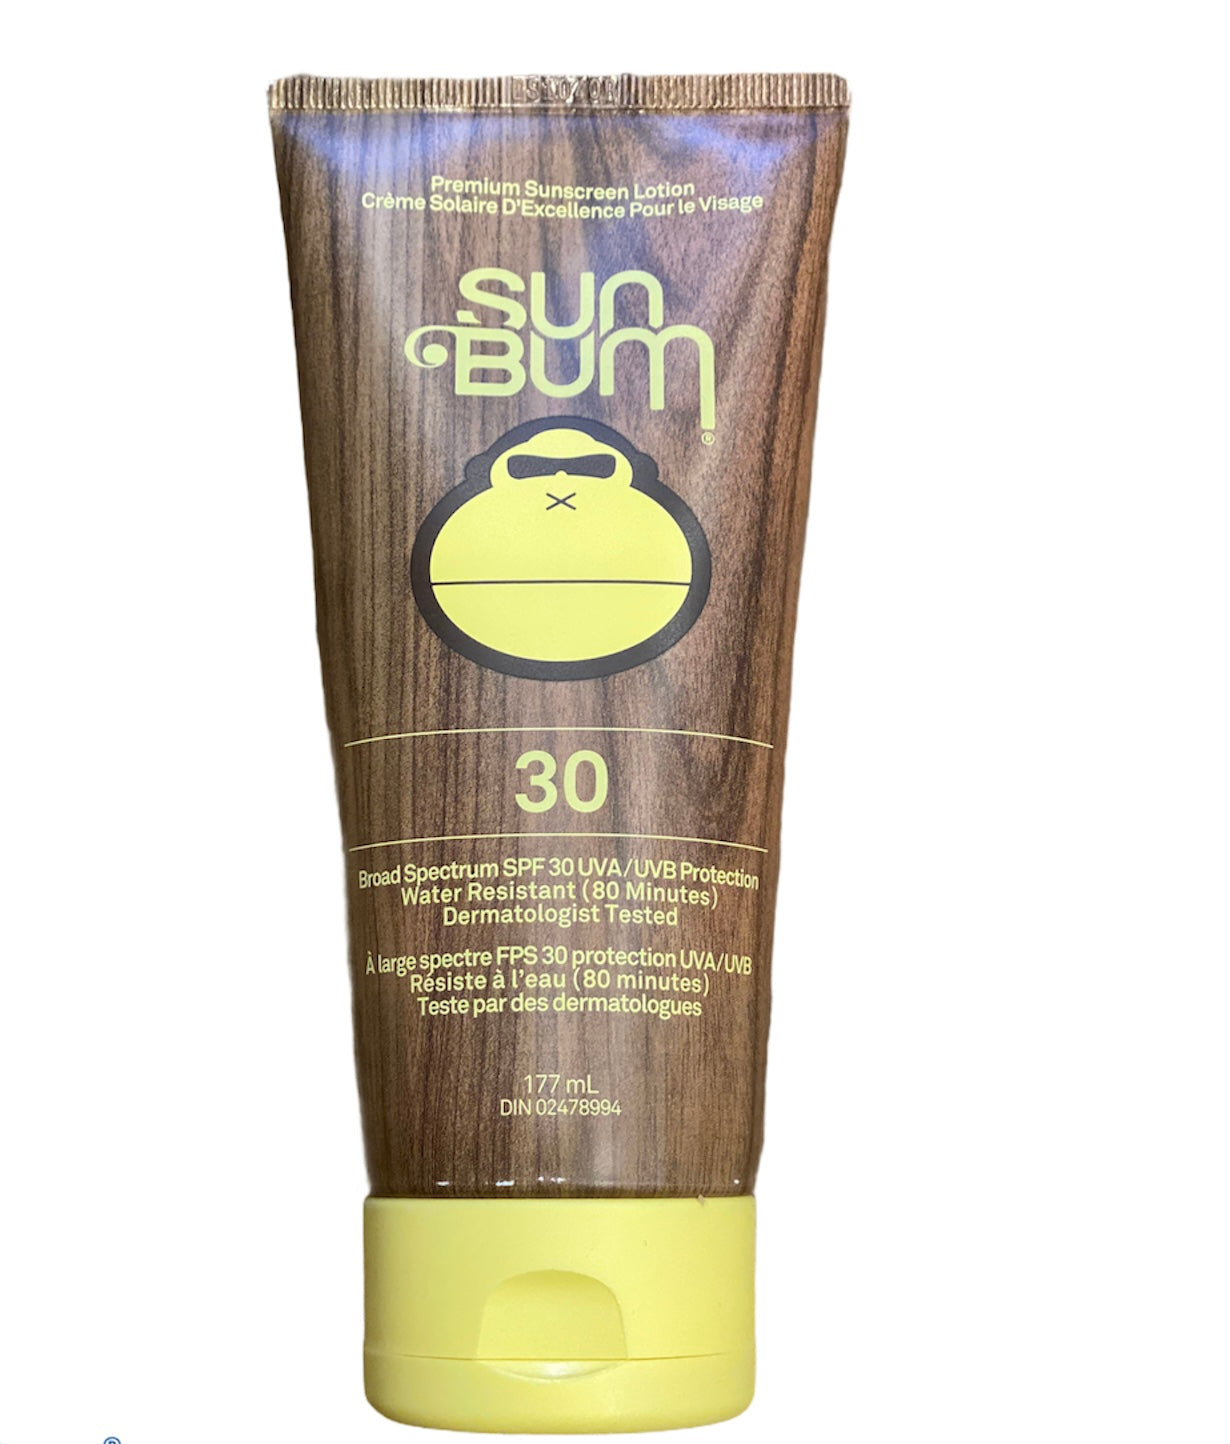 SUN BUM original spf 30 sunscreen lotion